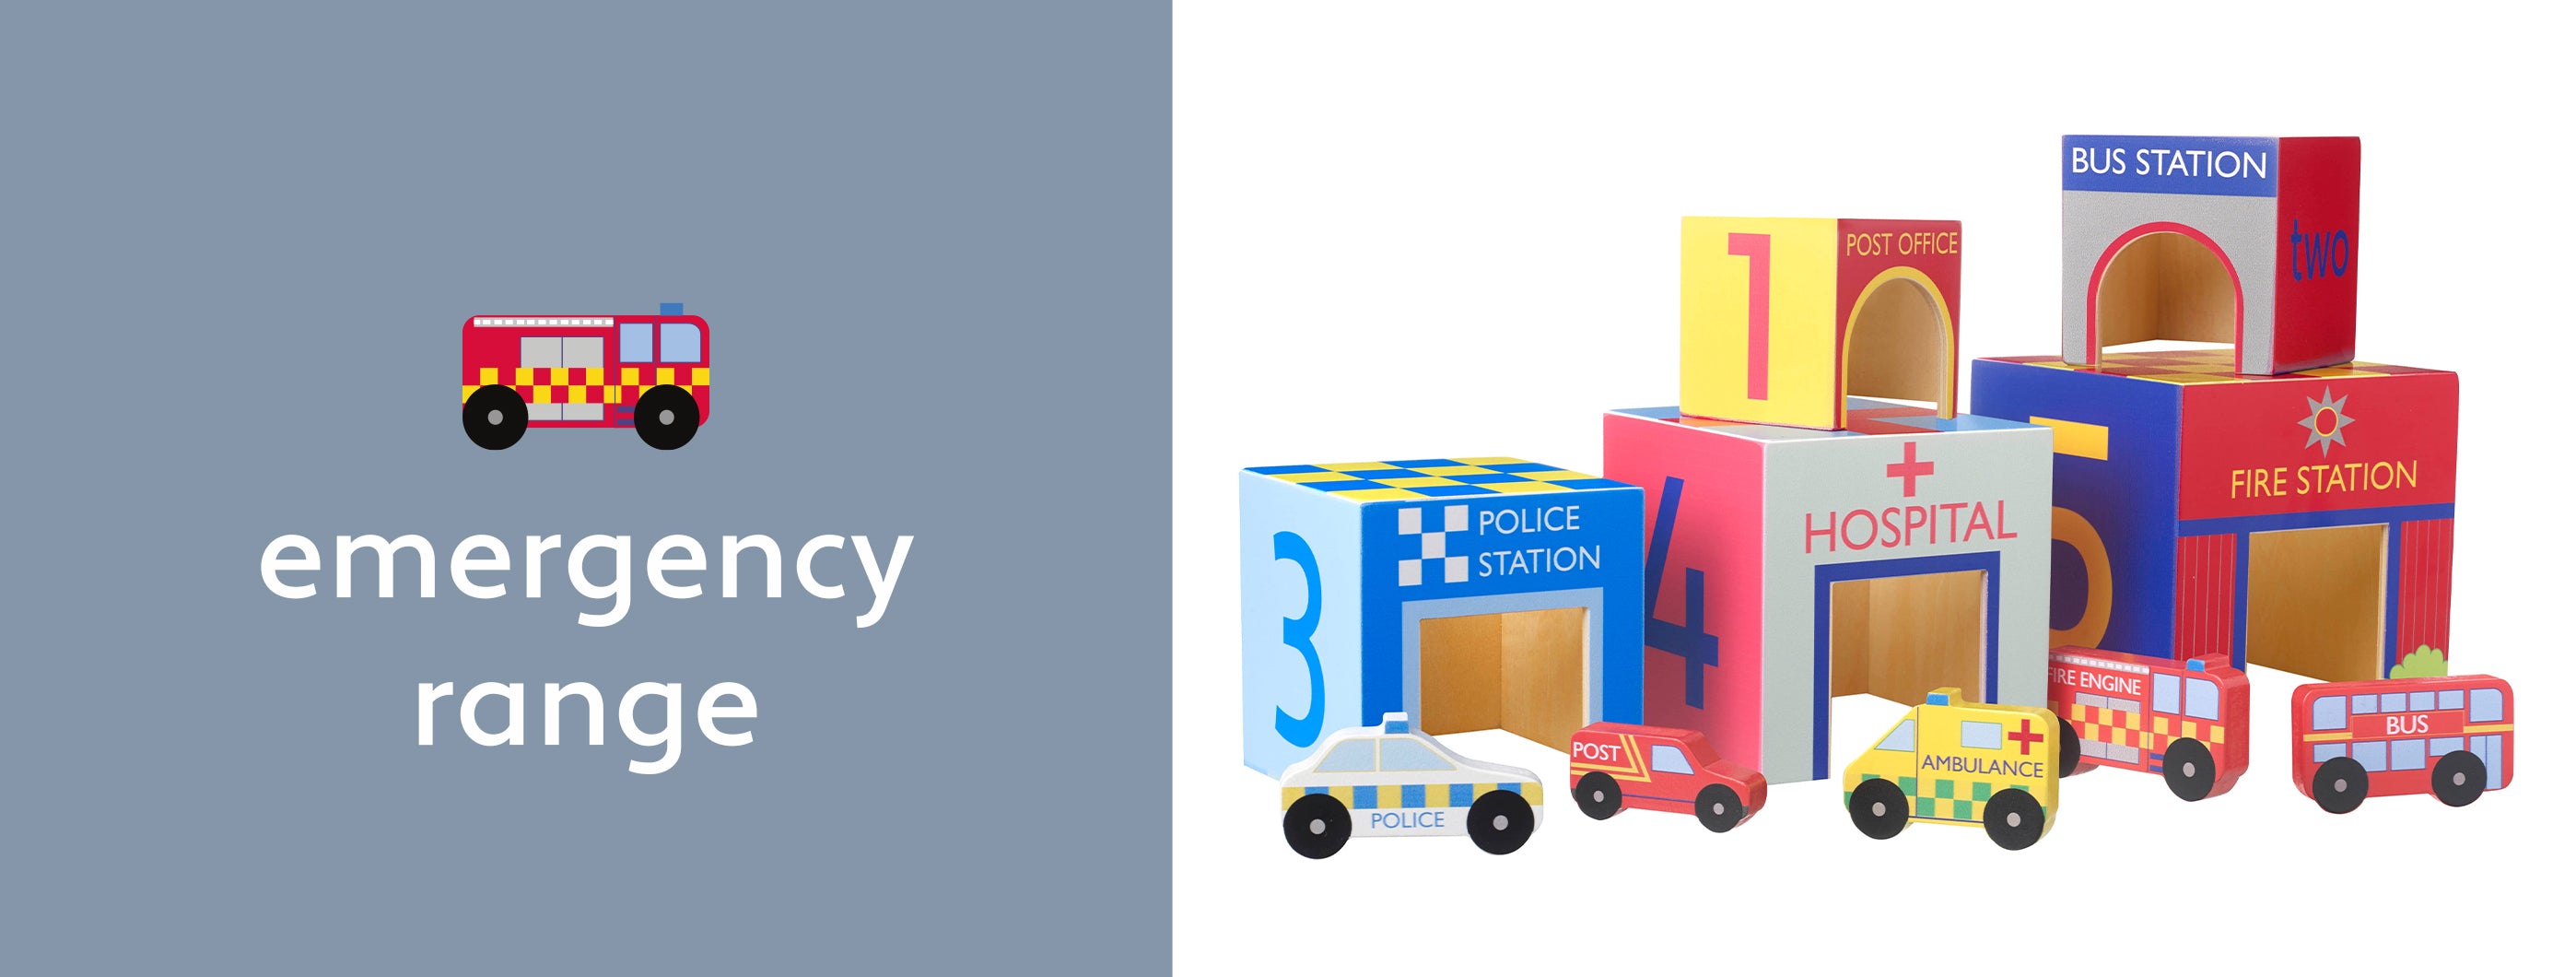 emergency services header image